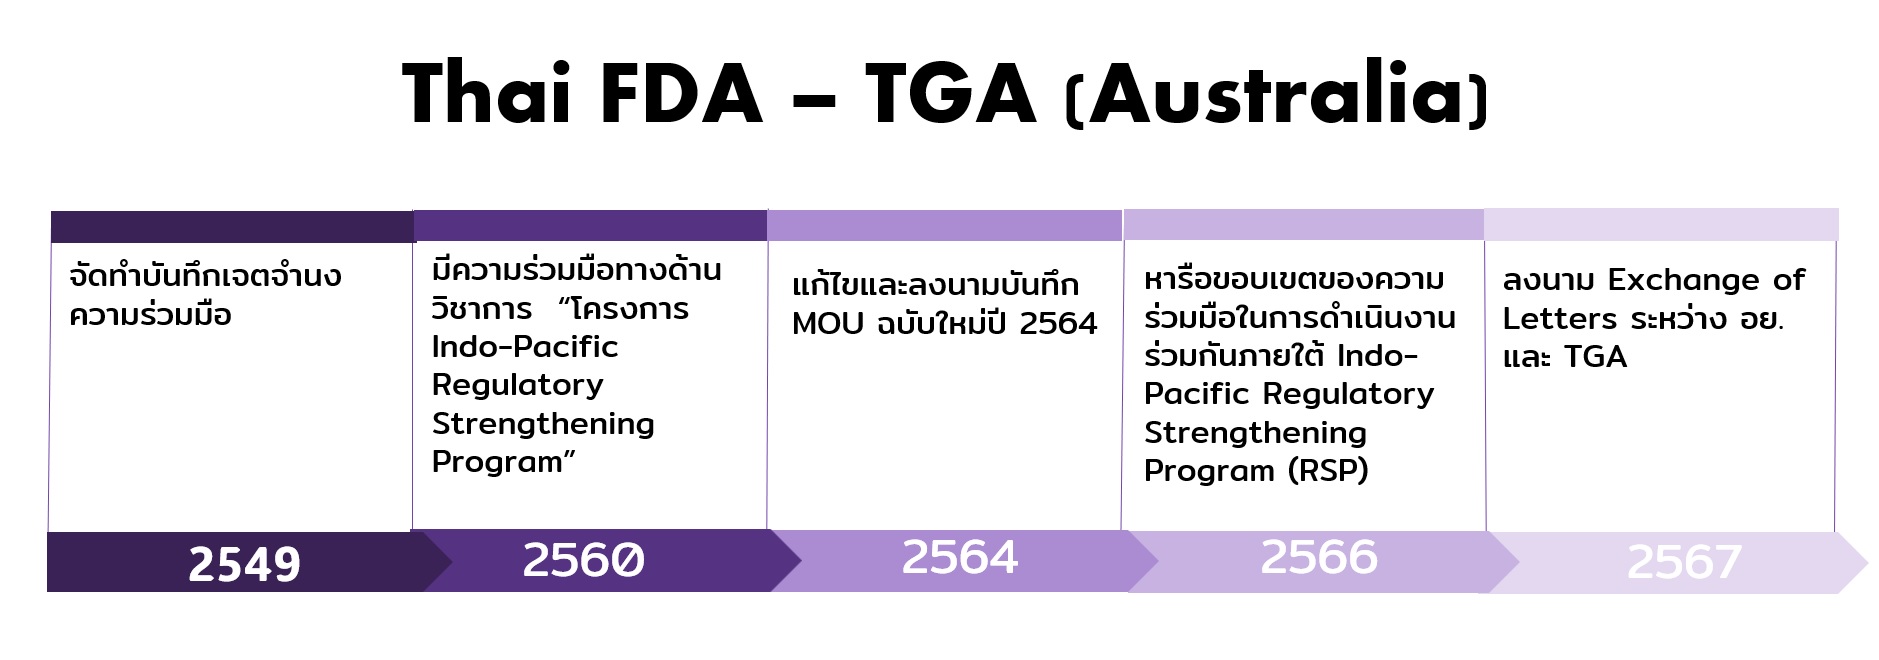 Thai FDA- TGA (Australia).jpg